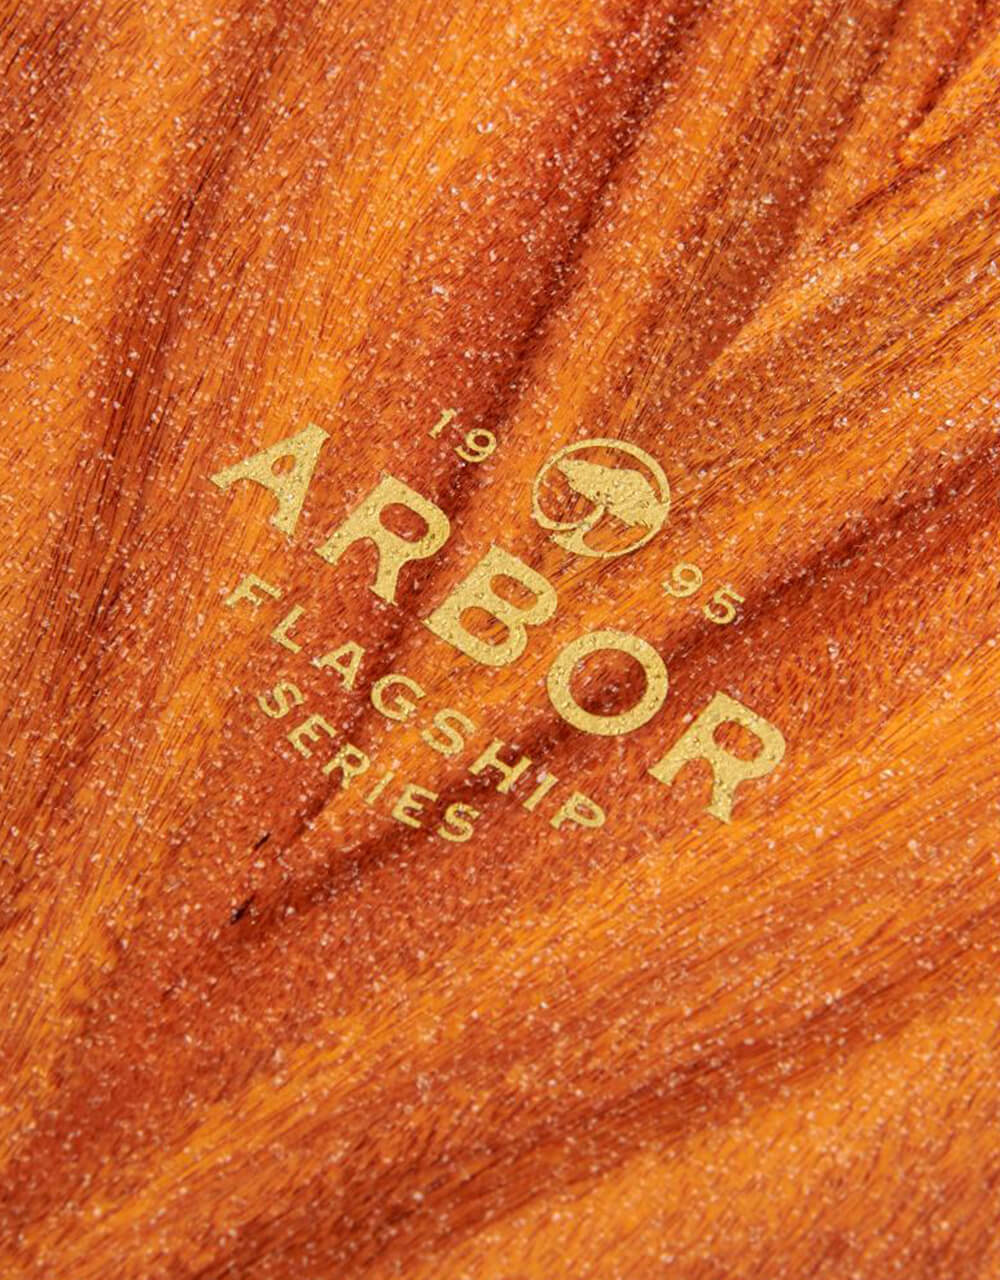 Arbor Flagship Axis 40 Drop Through Longboard - 40" x 8.75"